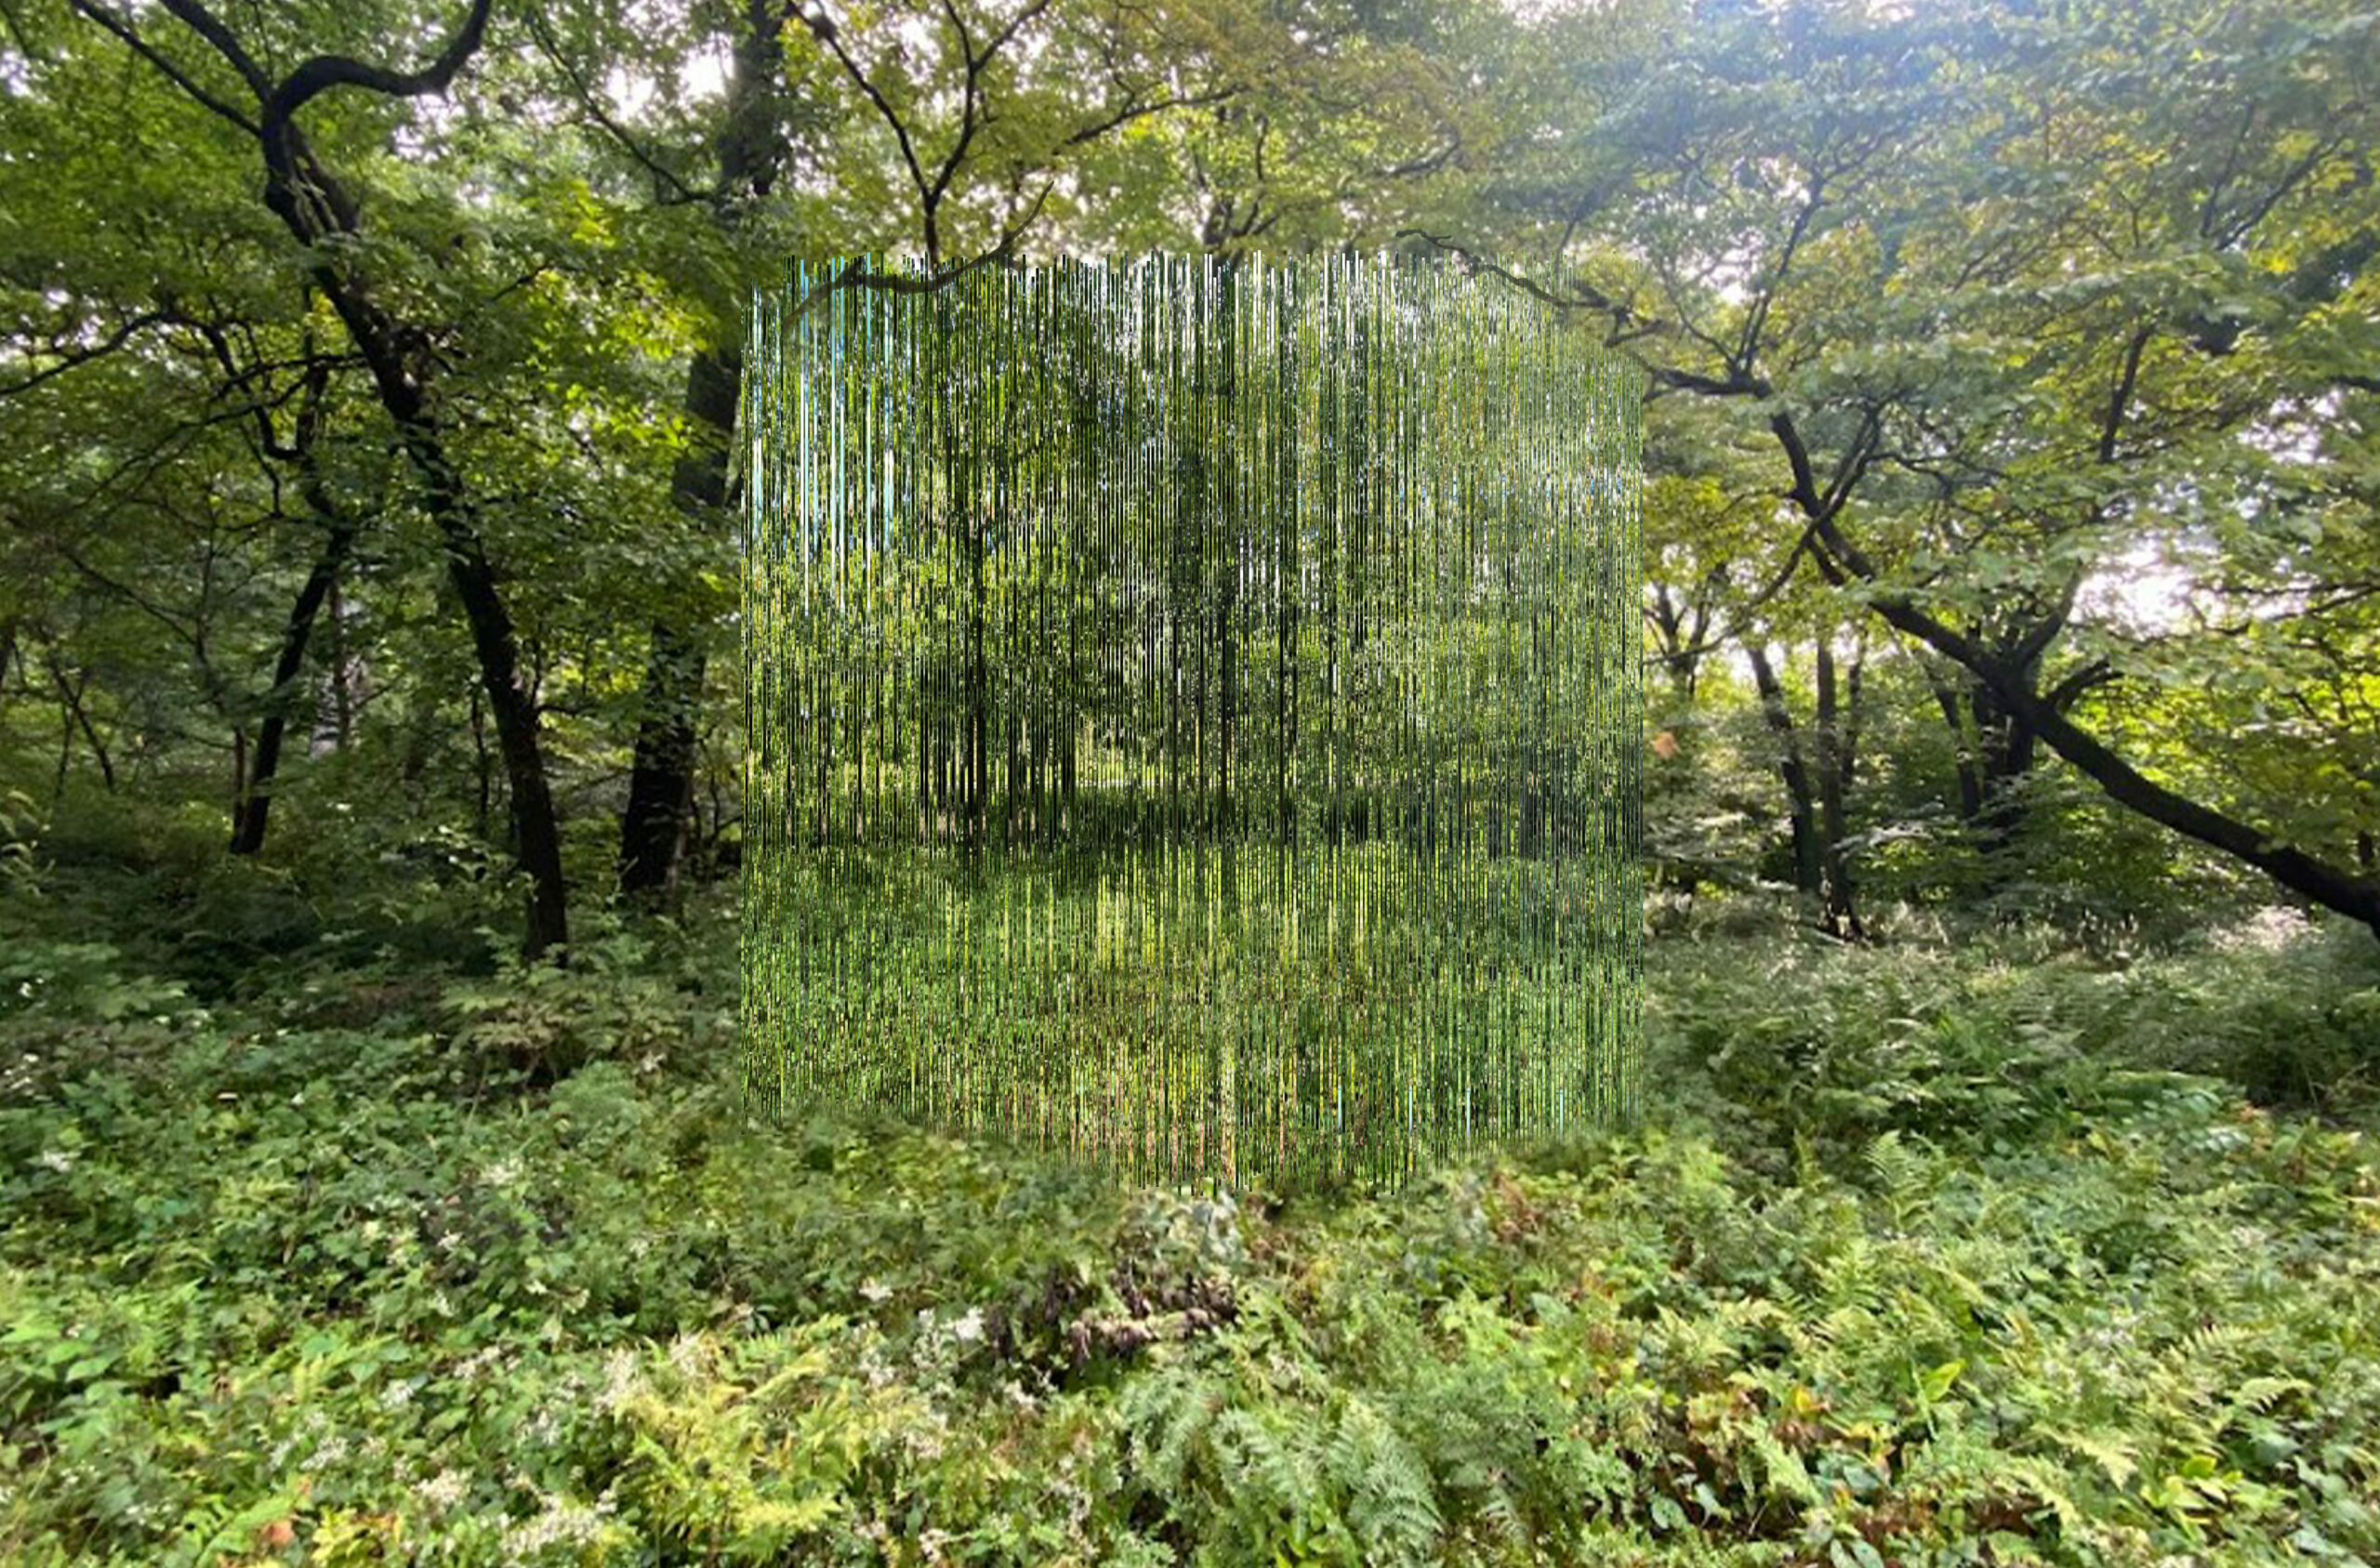 A mirrored art installation at the garden.